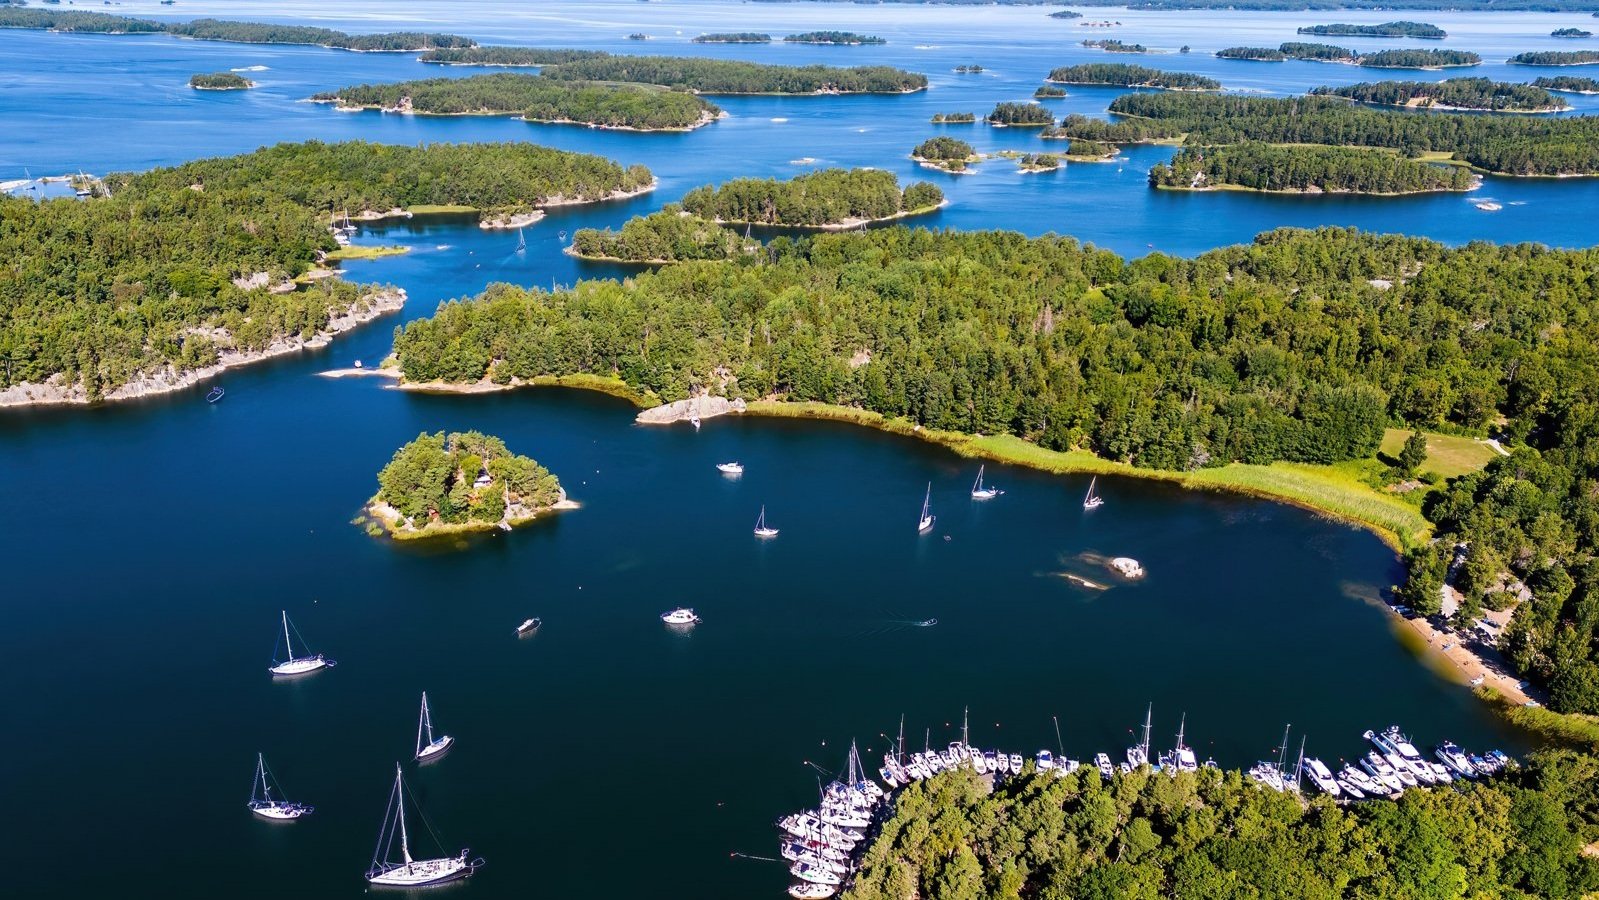 The Stockholm archipelago